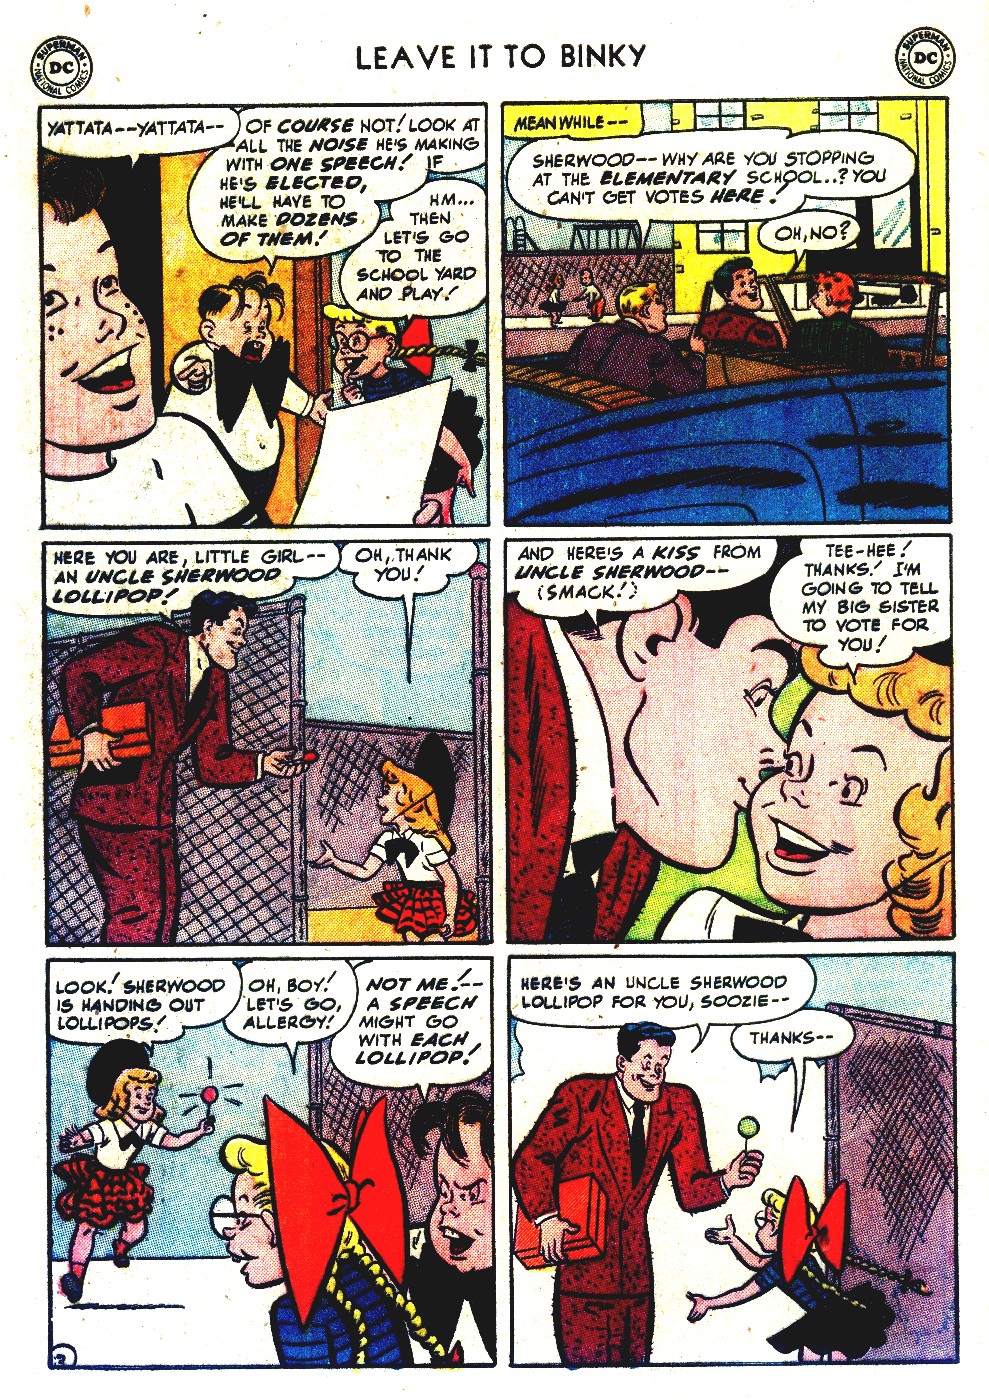 Read online Leave it to Binky comic -  Issue #26 - 34